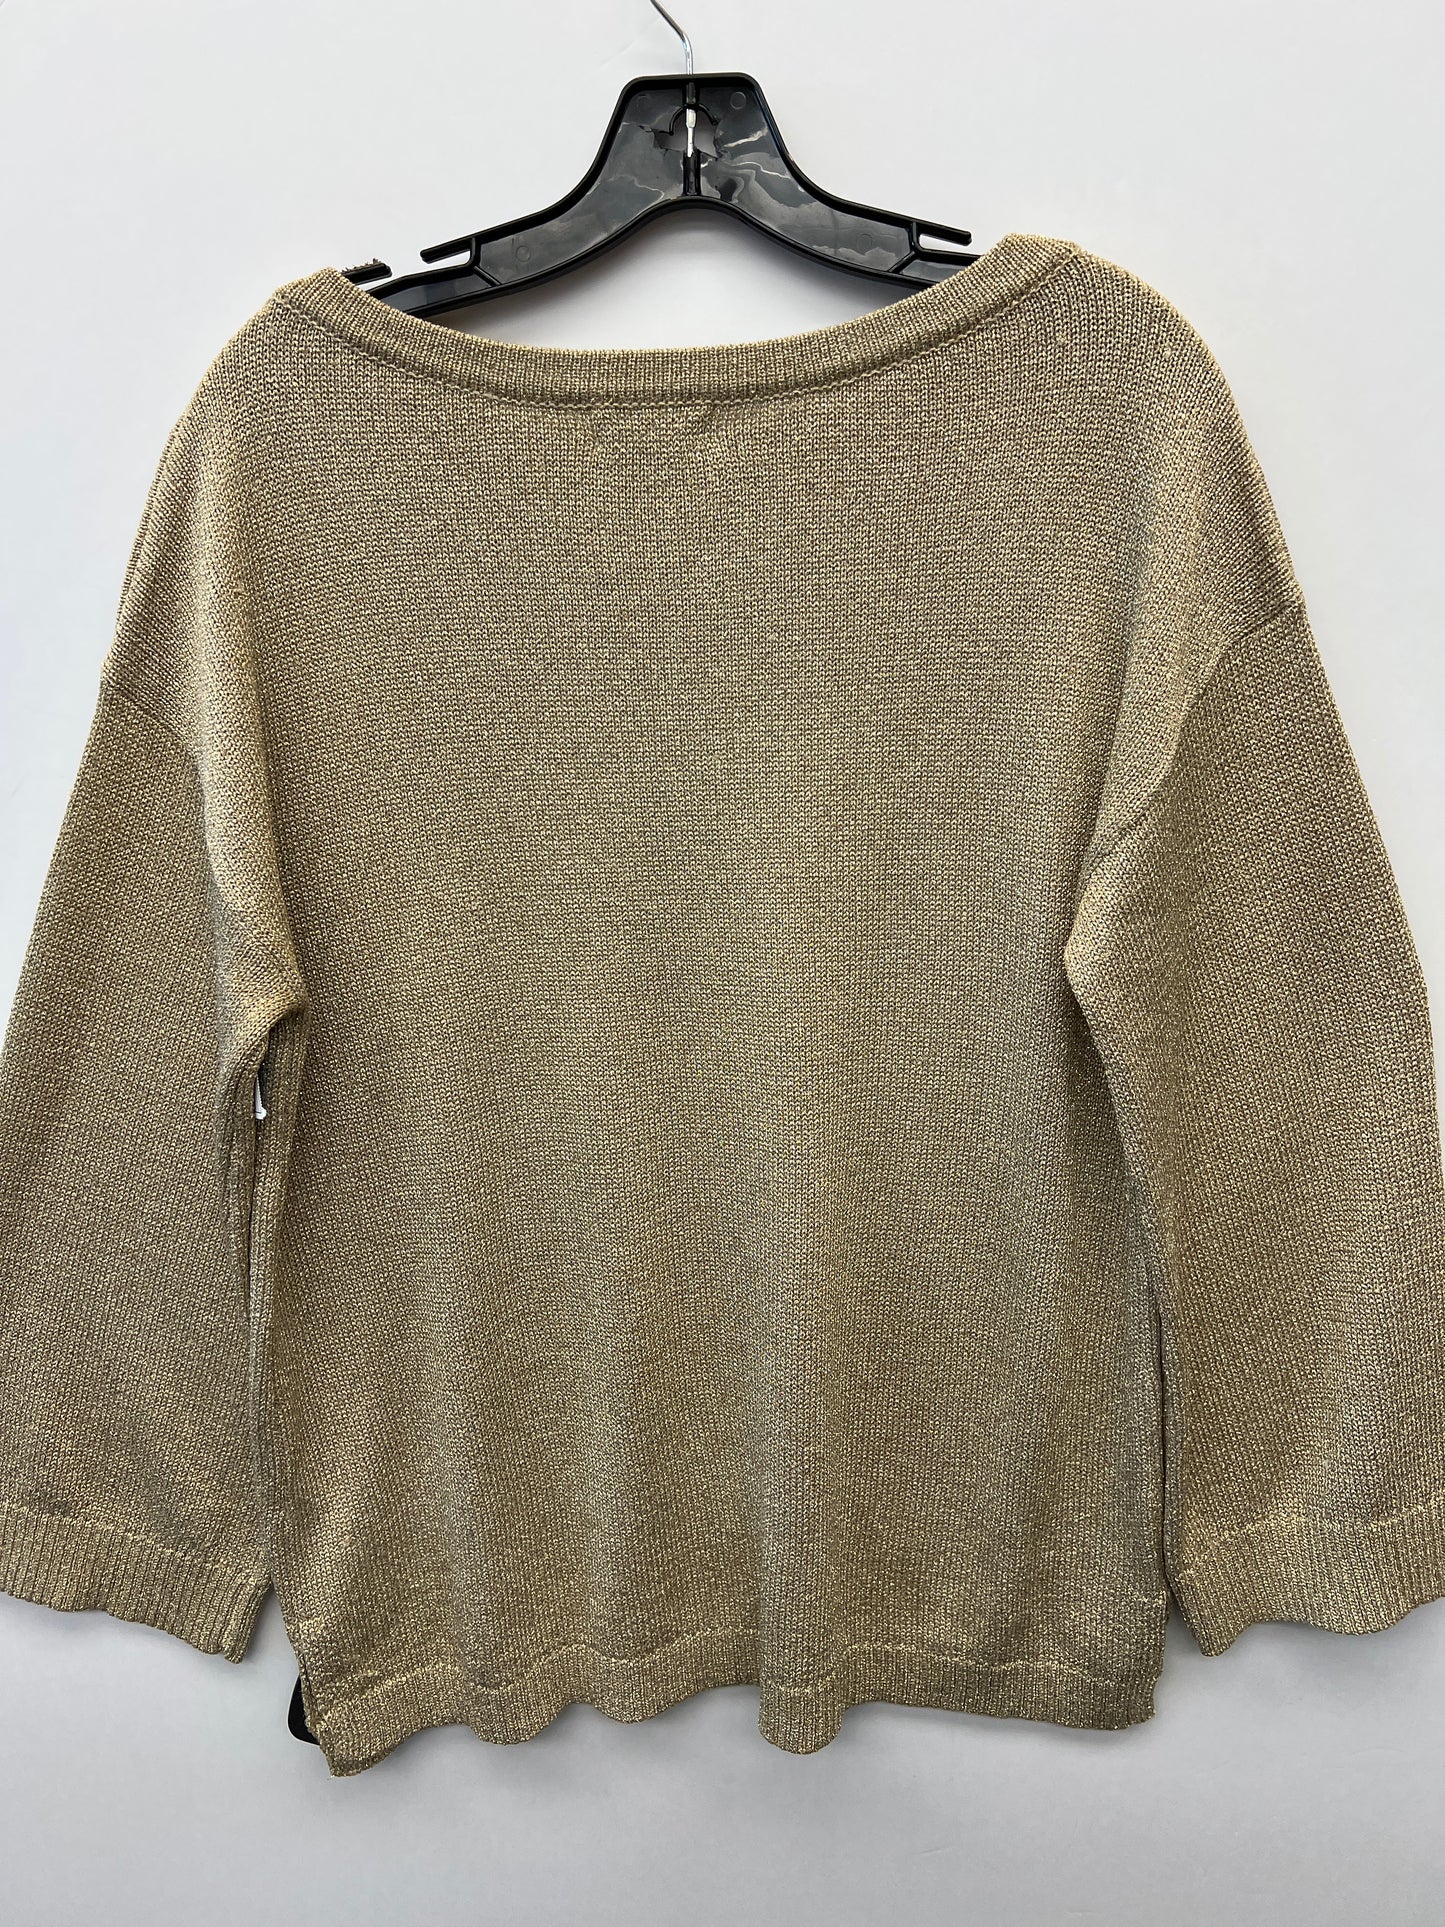 Sweater By Calvin Klein  Size: M